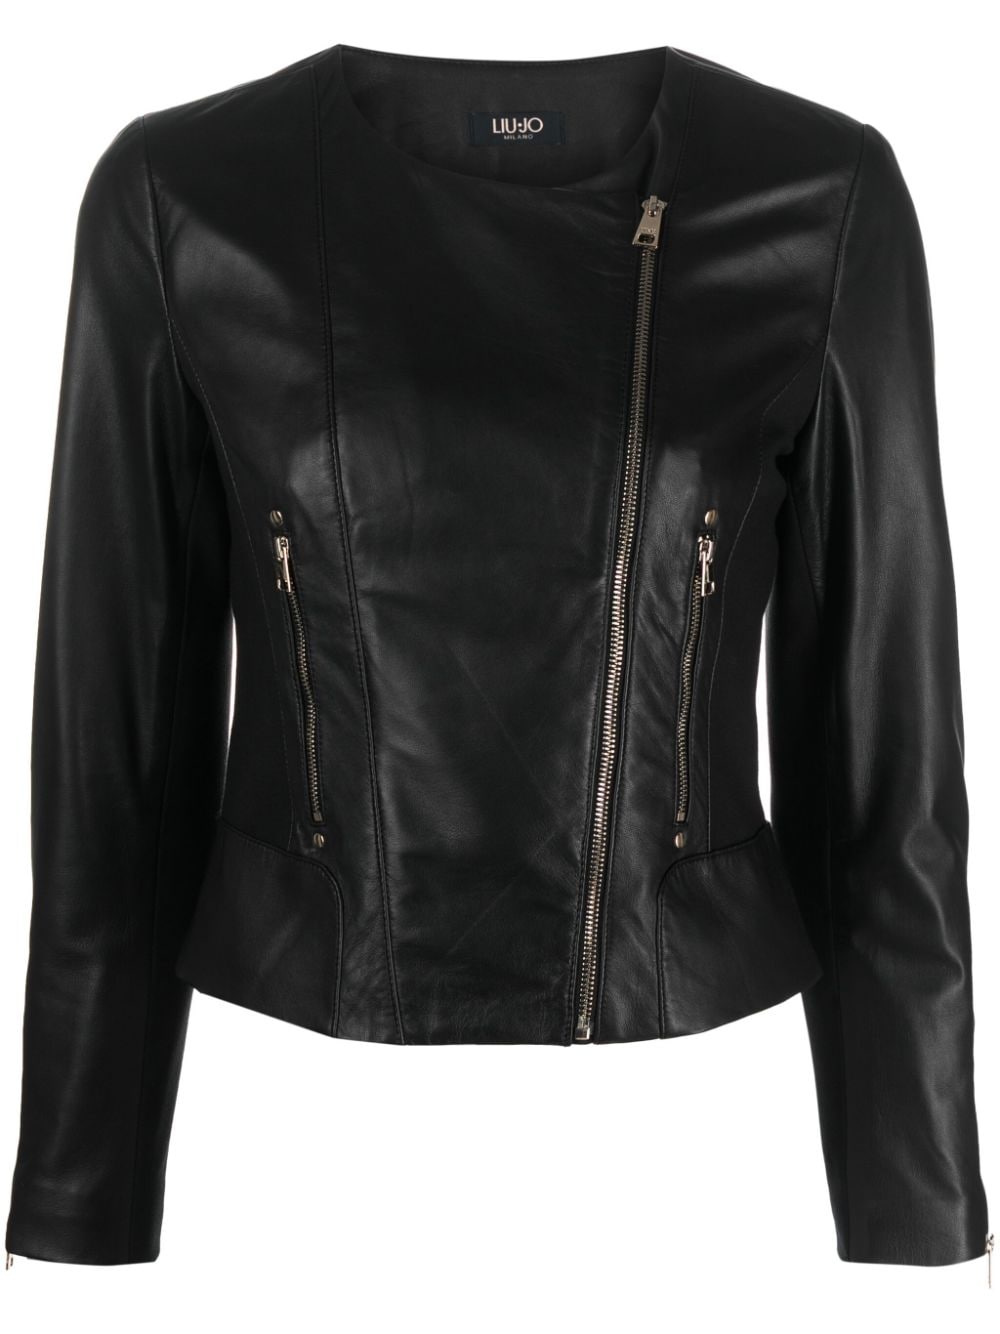 LIU JO zip-up leather jacket - Black von LIU JO